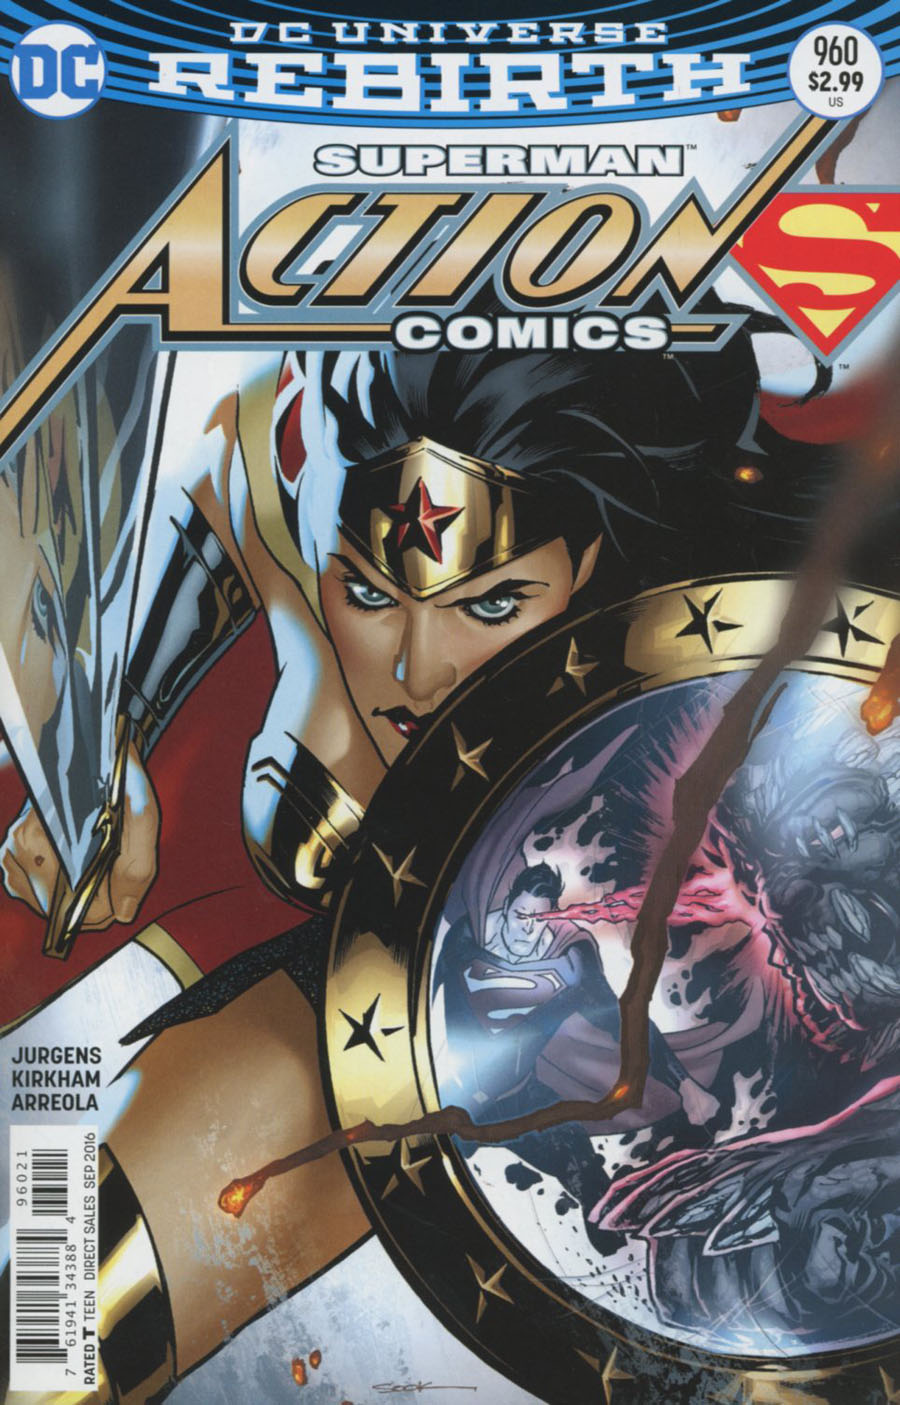 Action Comics #960